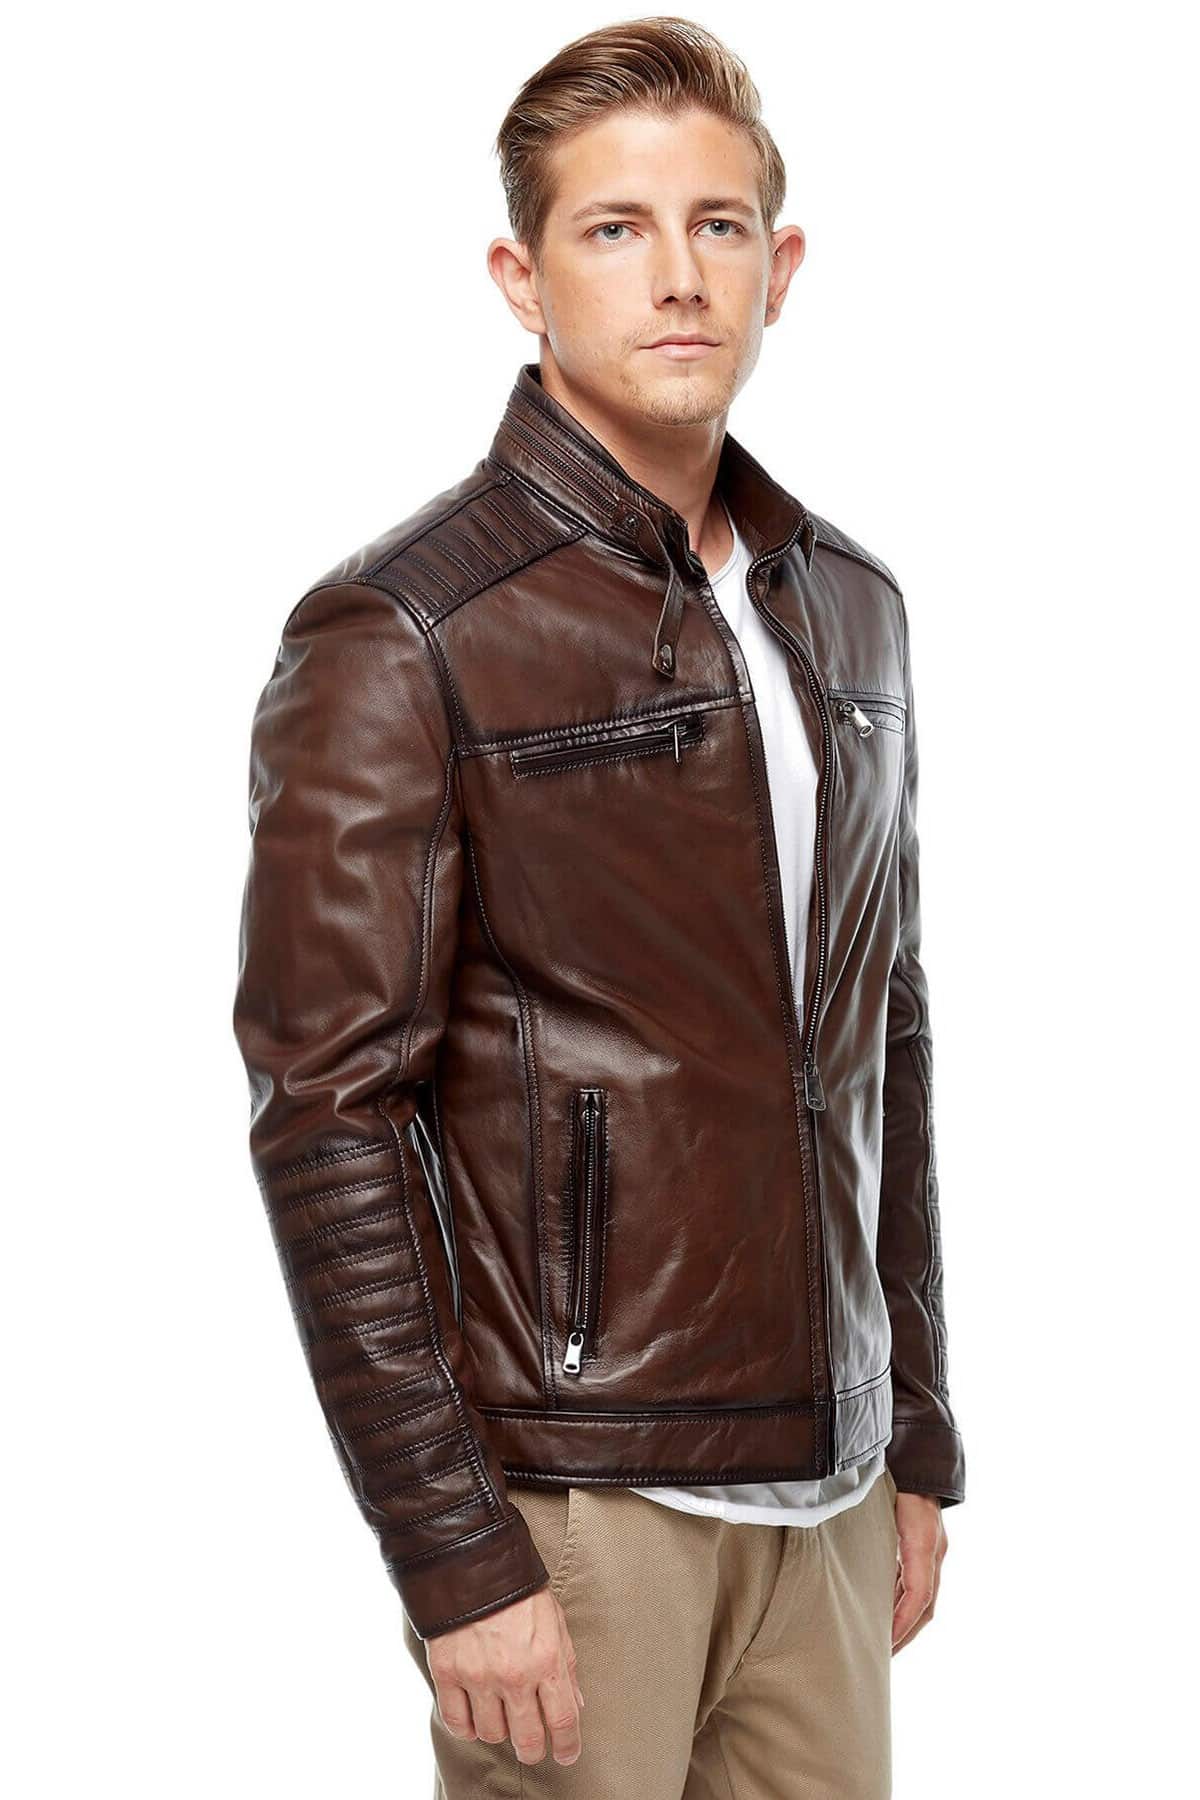 Blackout Brown Mens Leather Fashion Jacket3